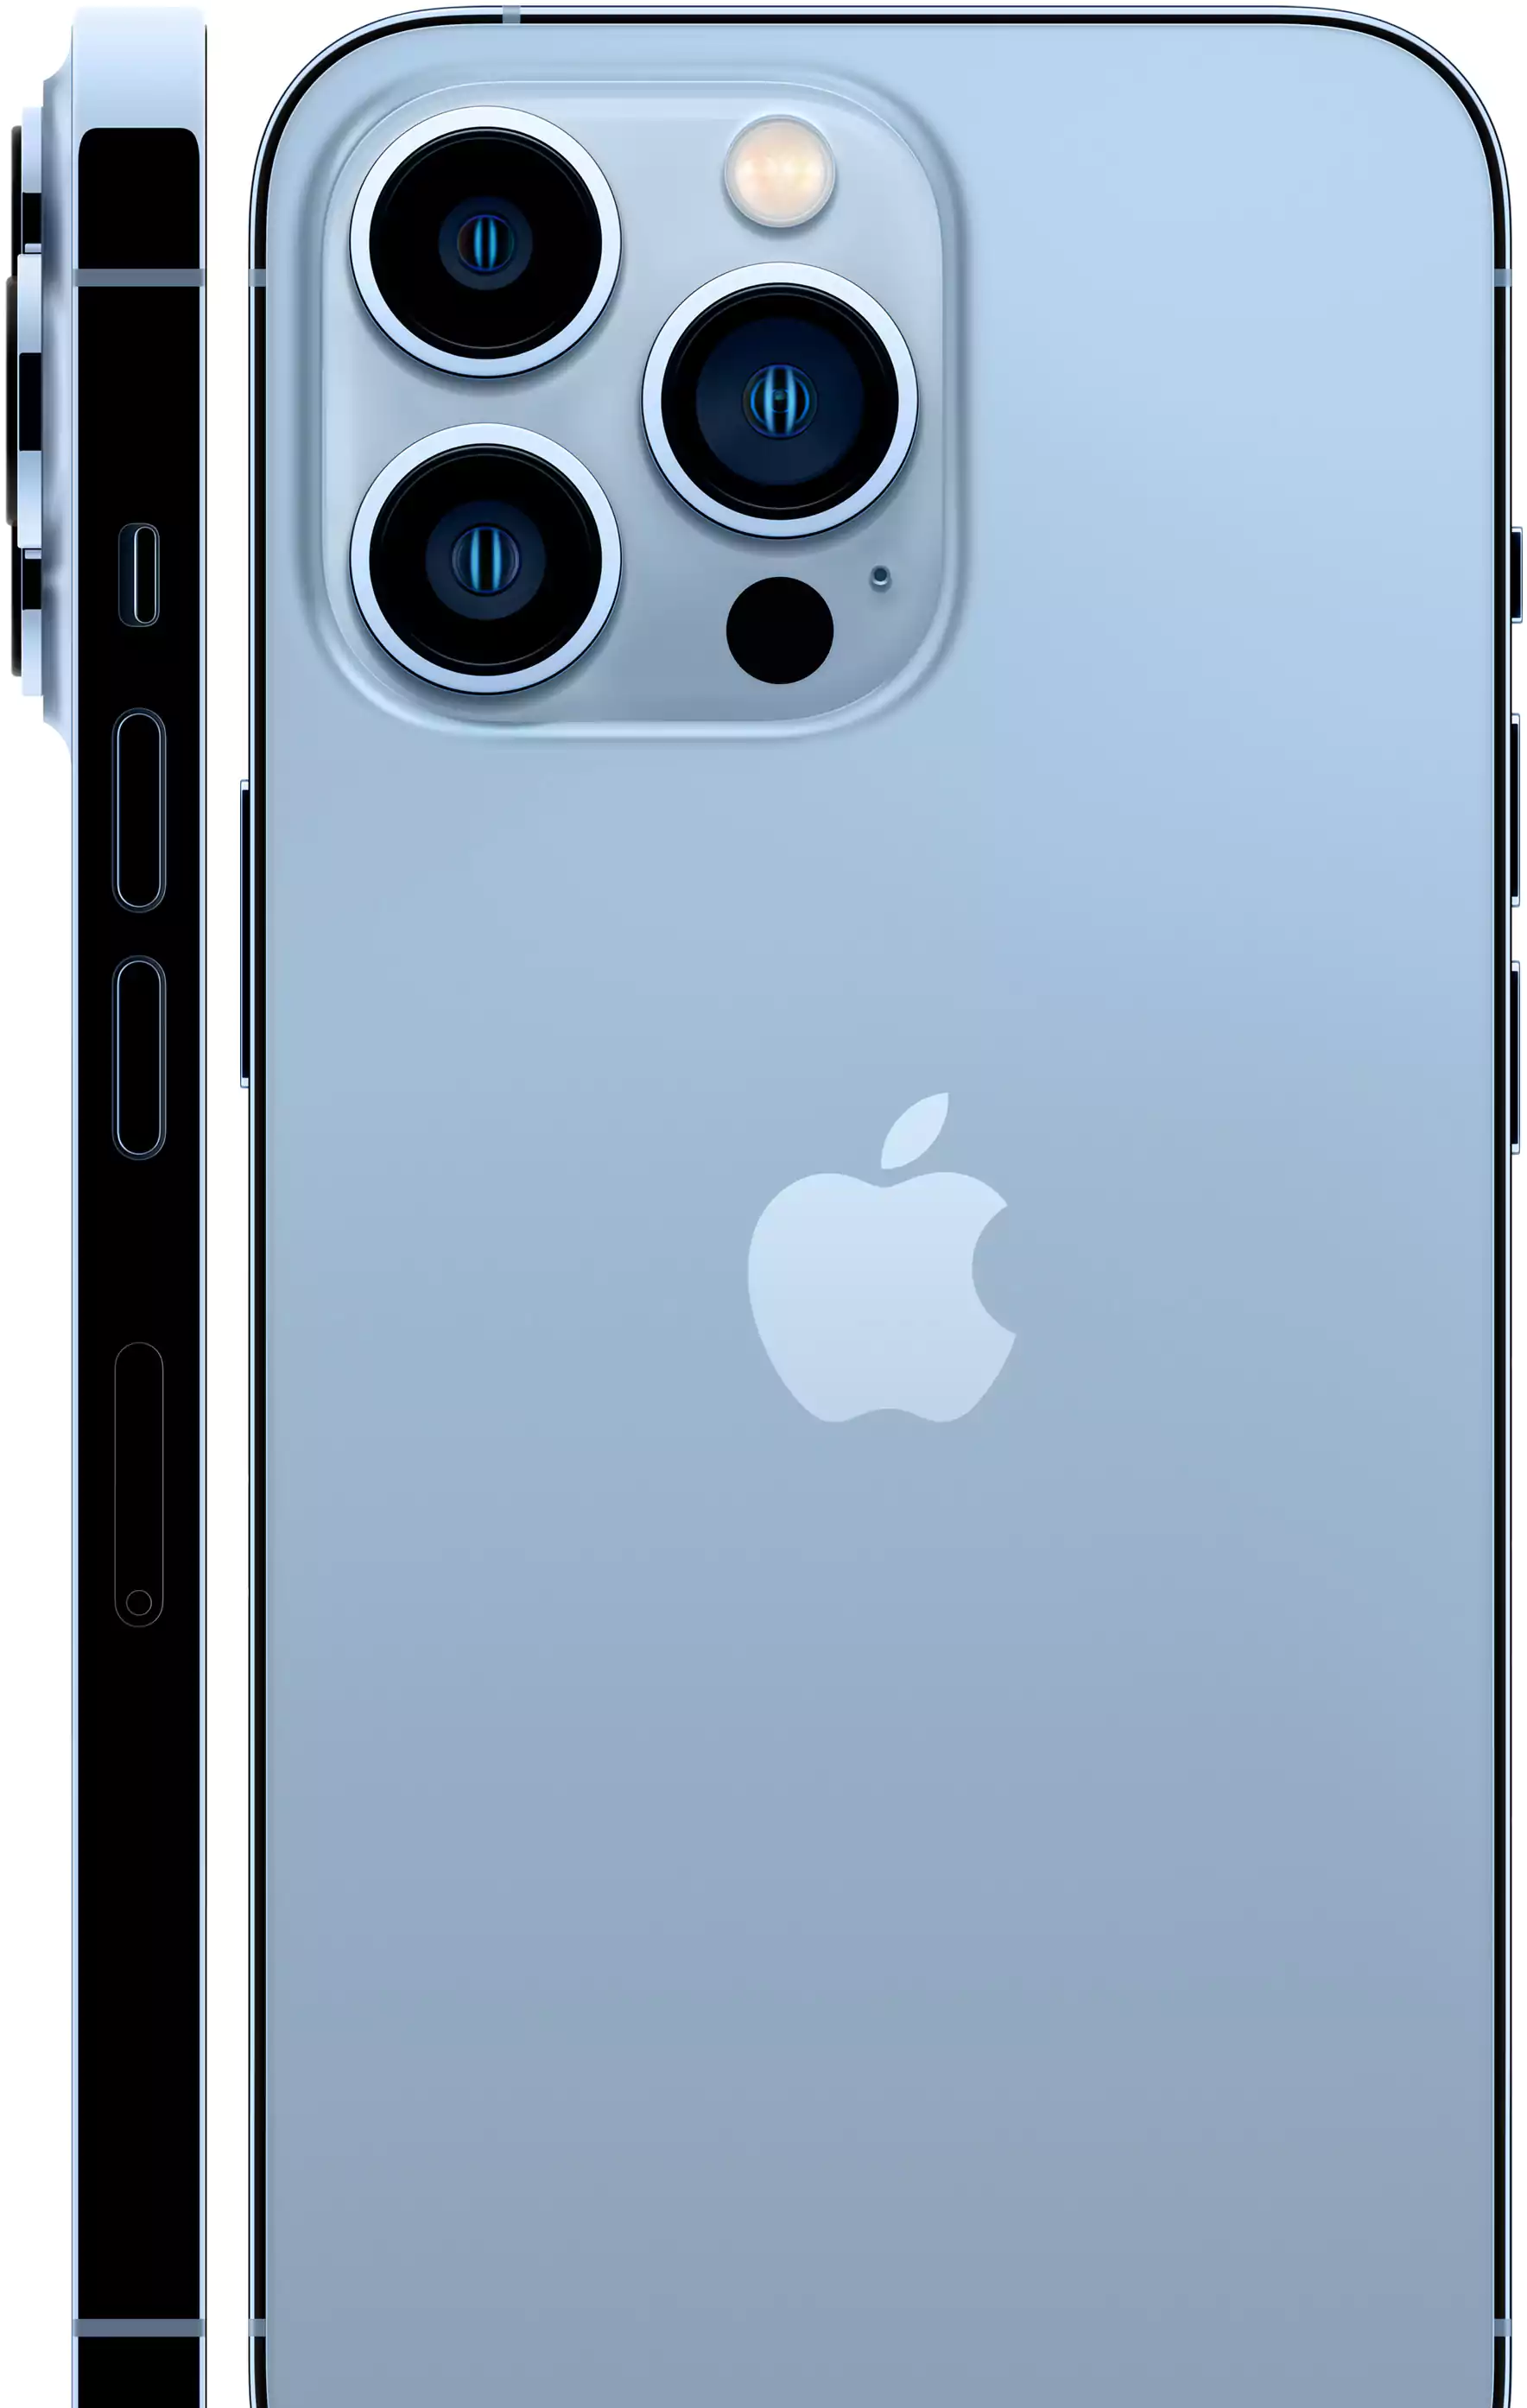 iPhone 13 Pro Max Single SIM Mobile, 128GB Internal Memory, 6GB RAM, 5G Network, Blue